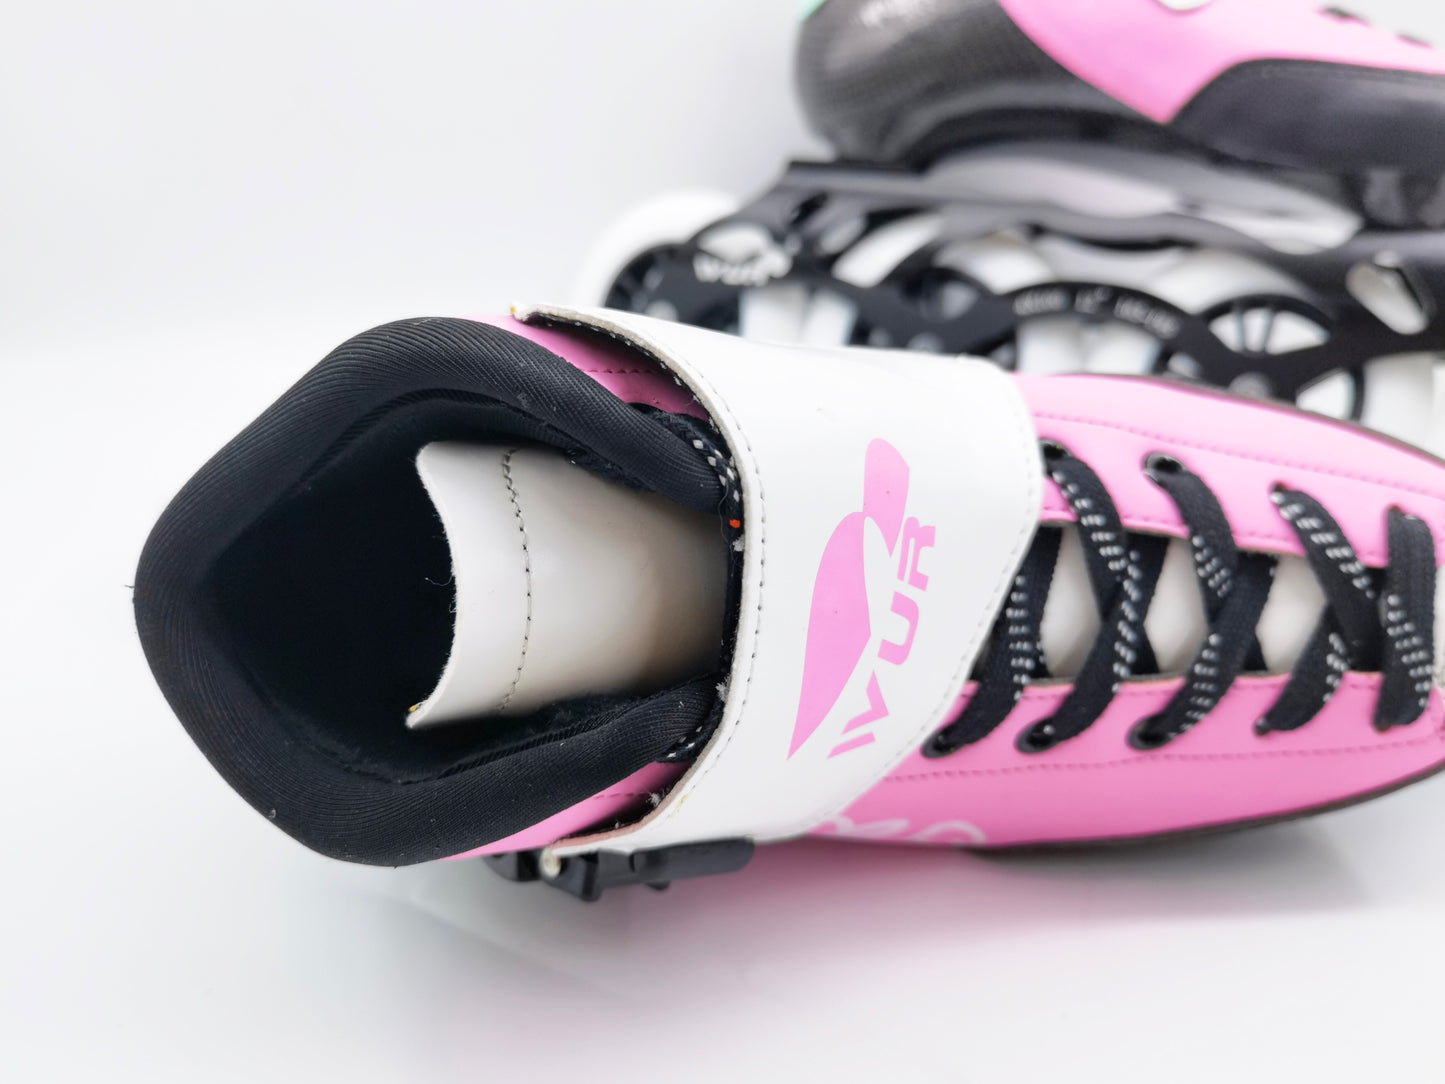 WUR skates inline speed skates carbon fiber pink CX02 4*110mm in stock